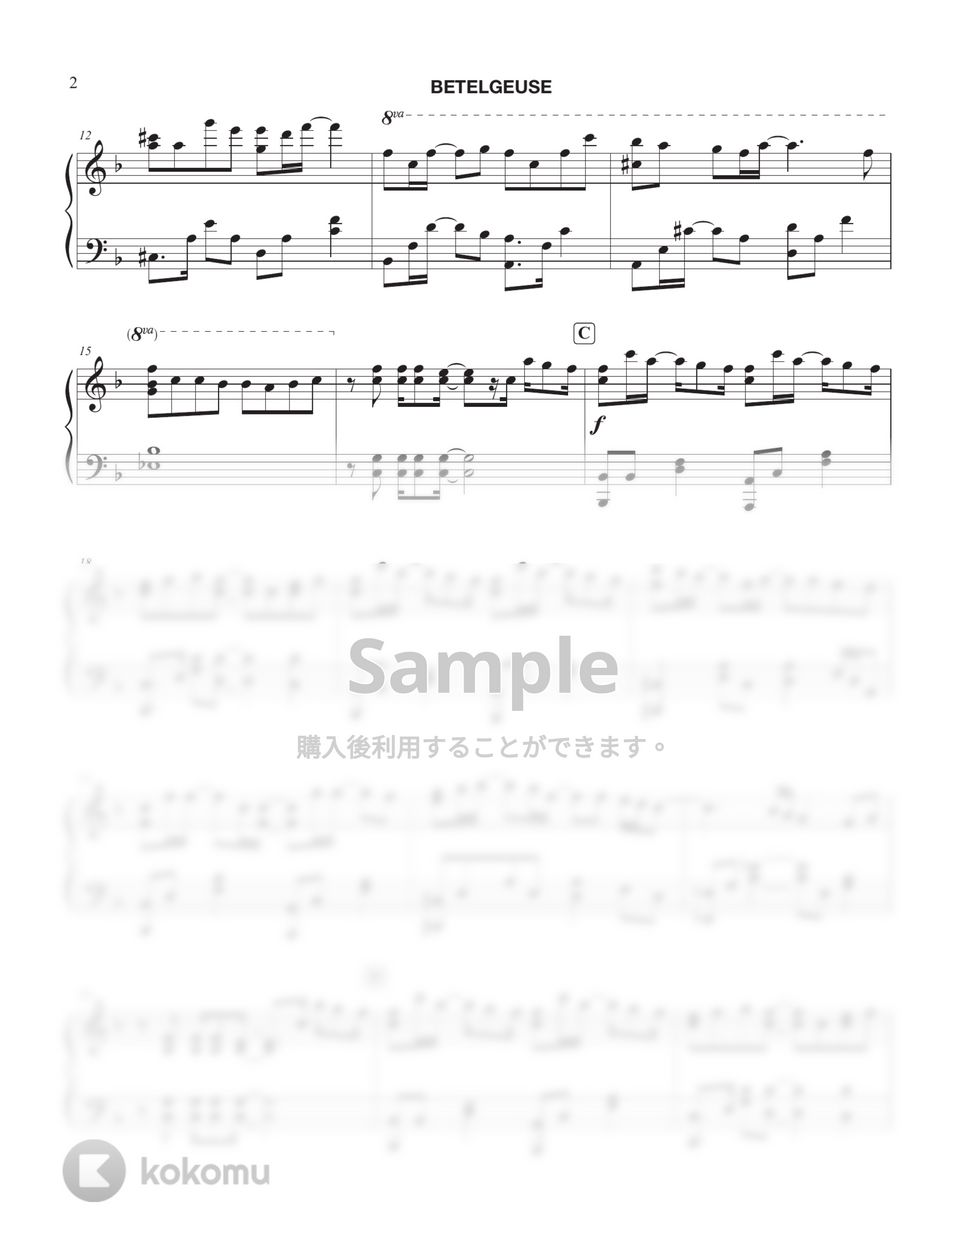 Yuuri (優里) - BETELGEUSE (ベテルギウス) by Tully Piano